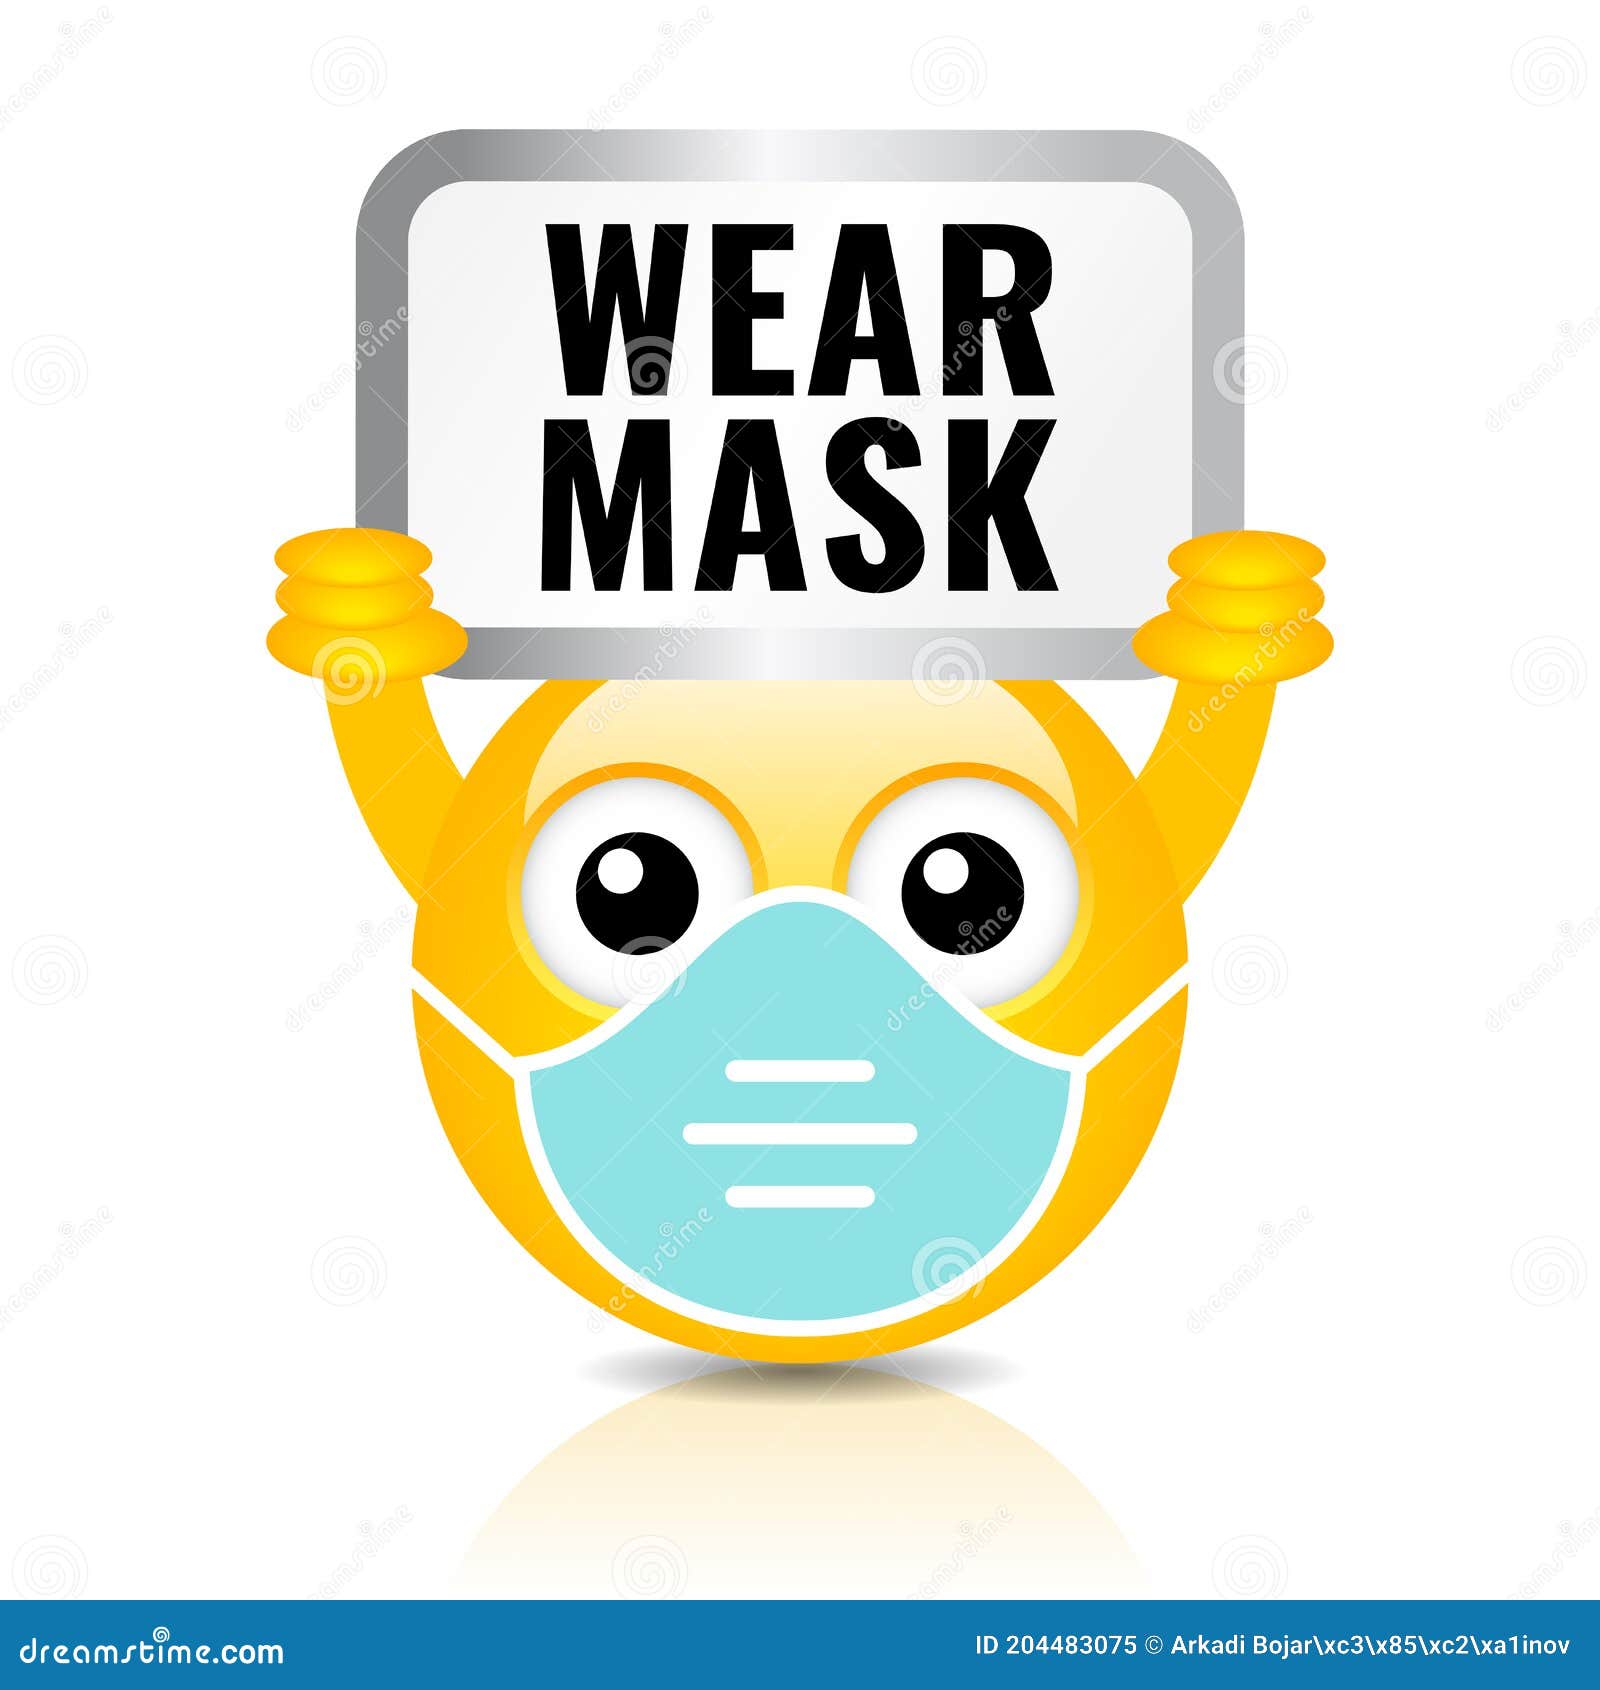 wear face mask  sign